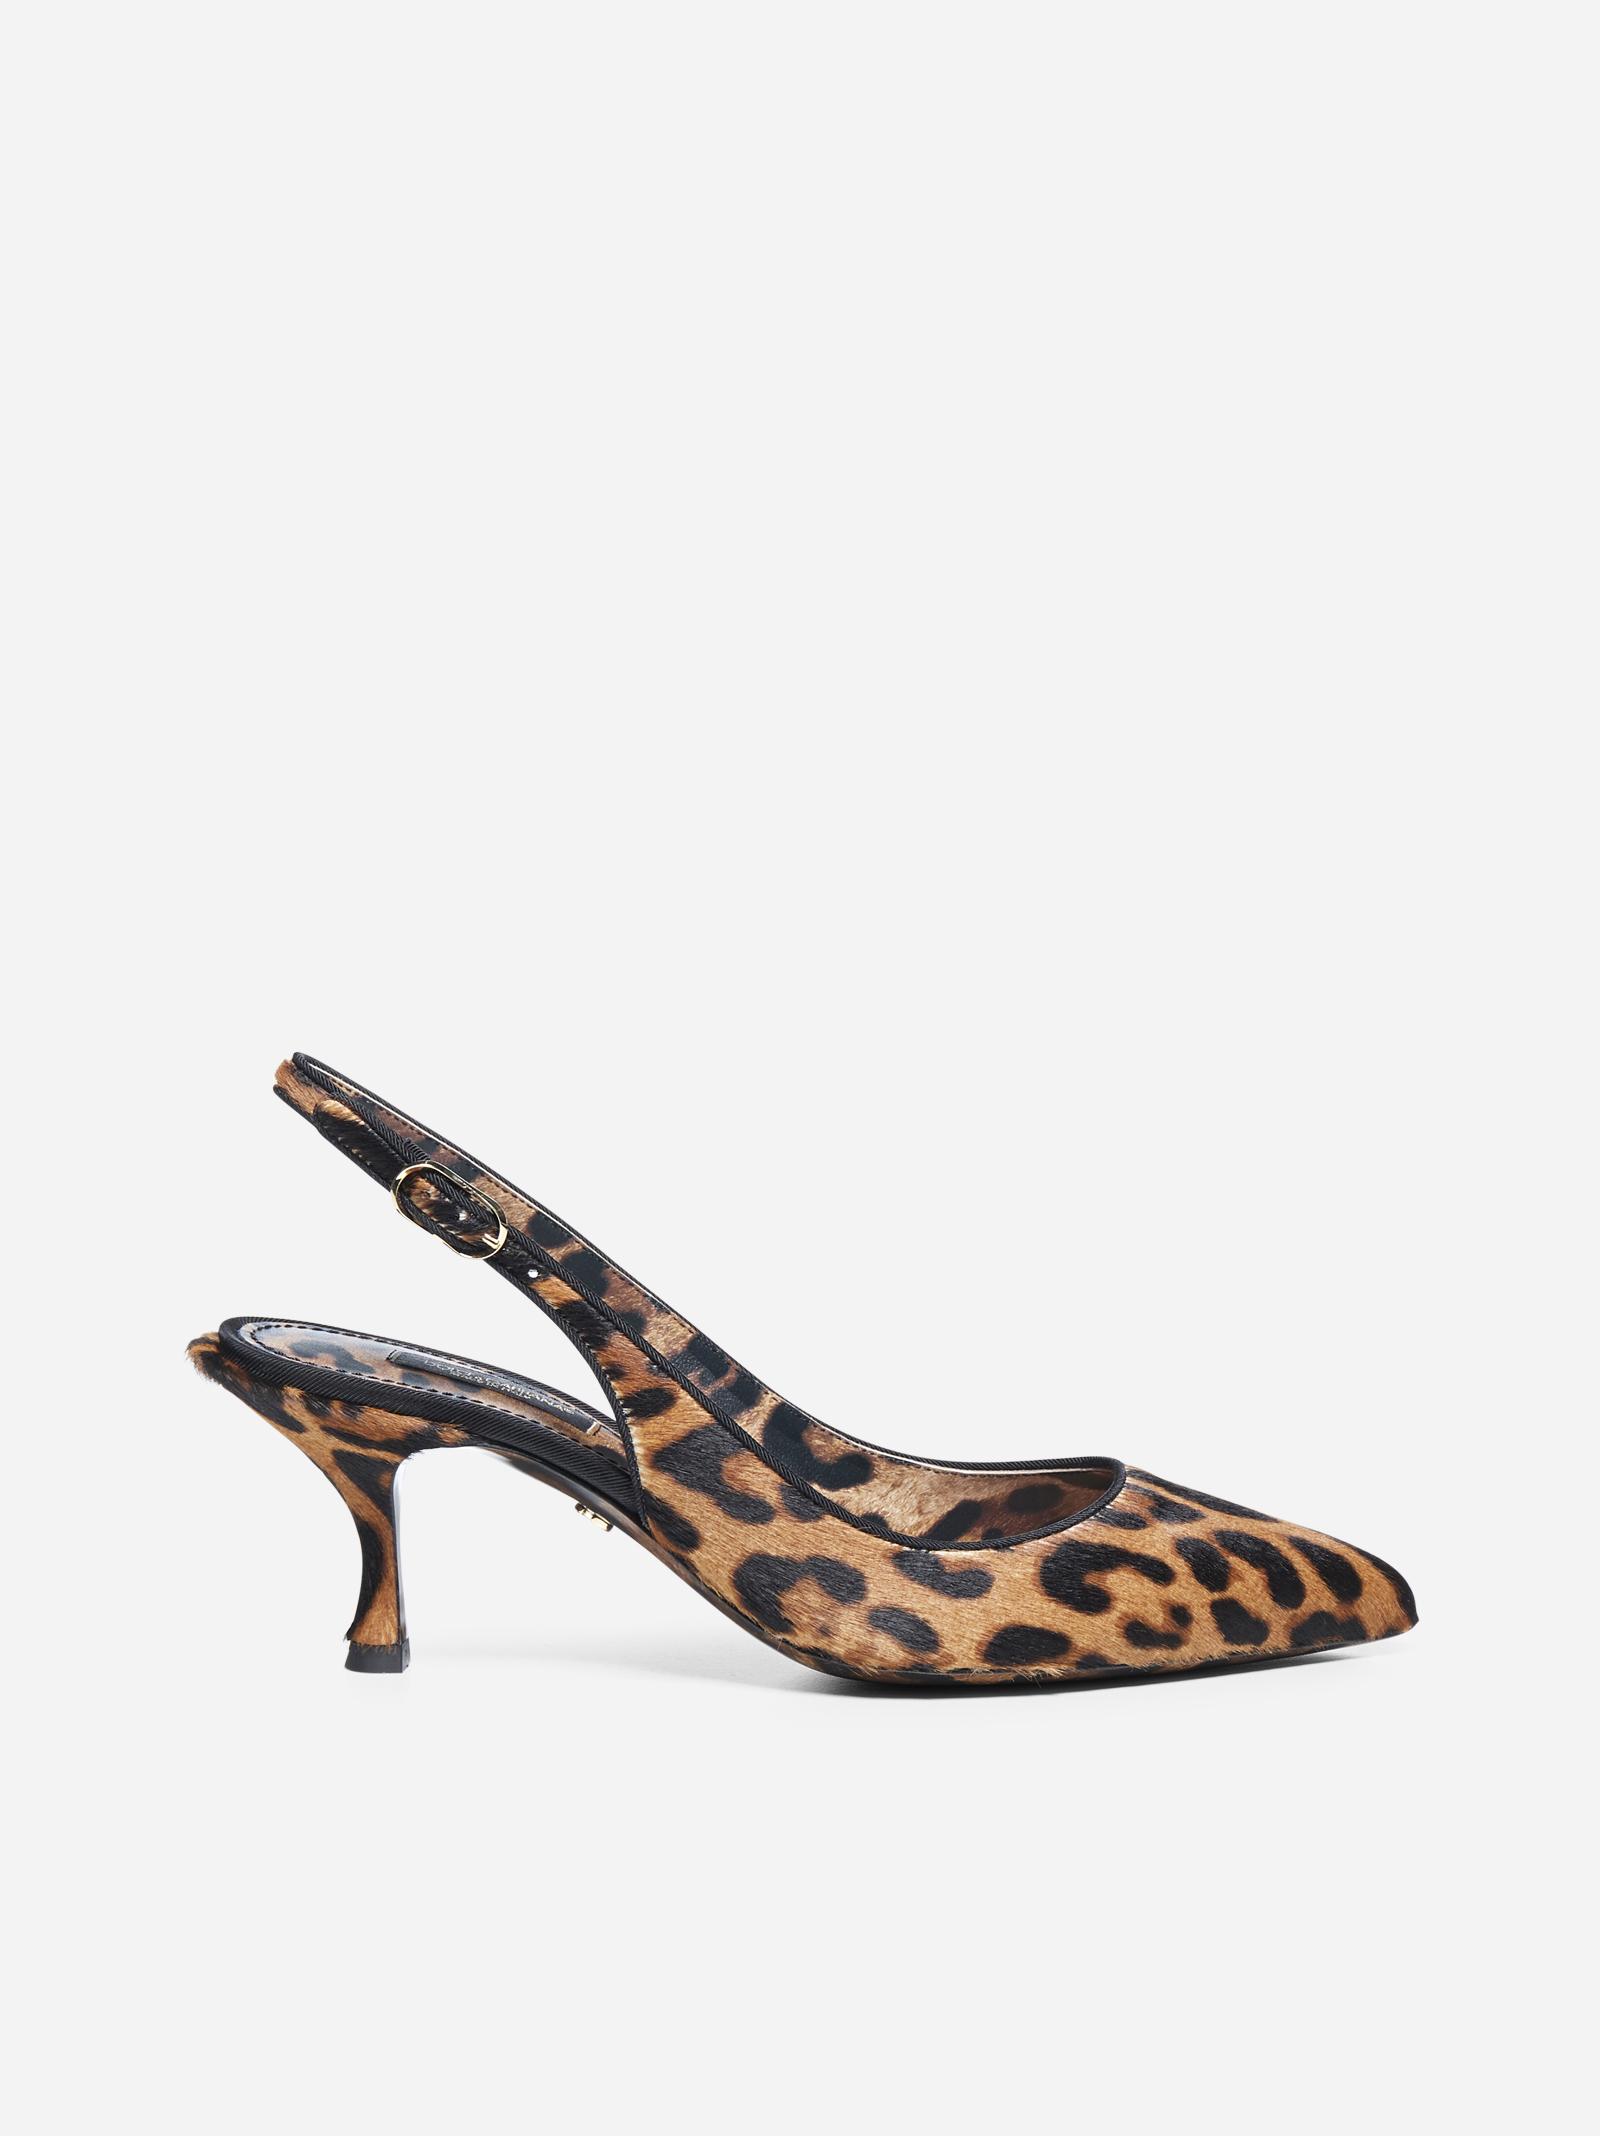 Dolce & Gabbana Leather Leopard Print Ponyskin Slingback Shoes in Brown ...